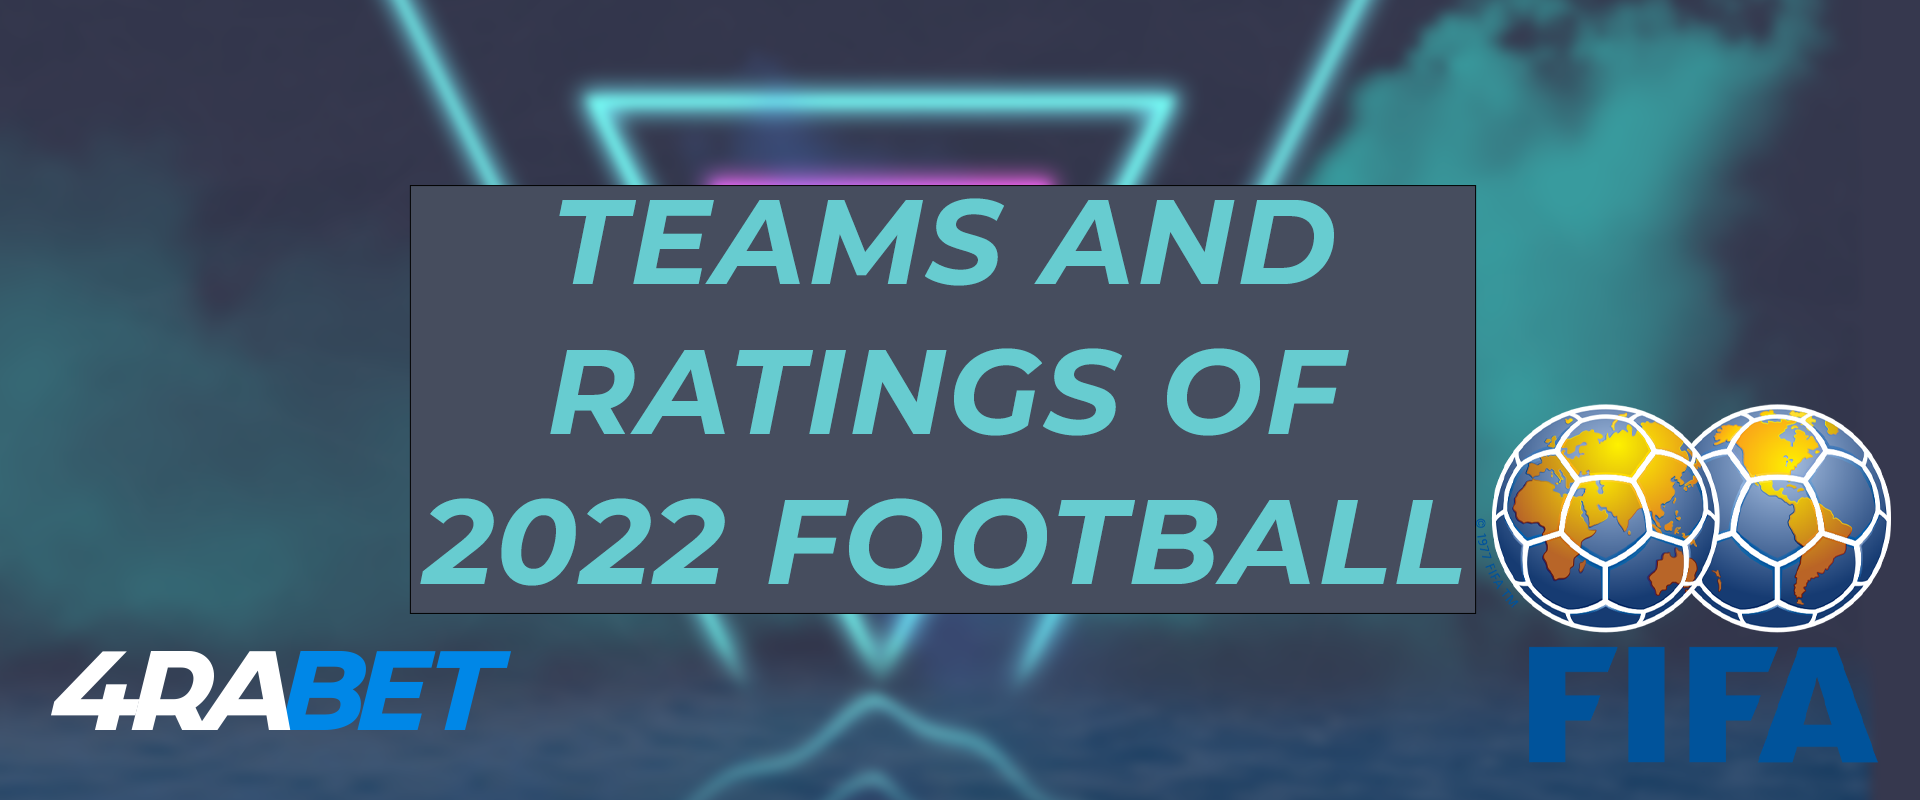 Current football teams rating via 4rabet.